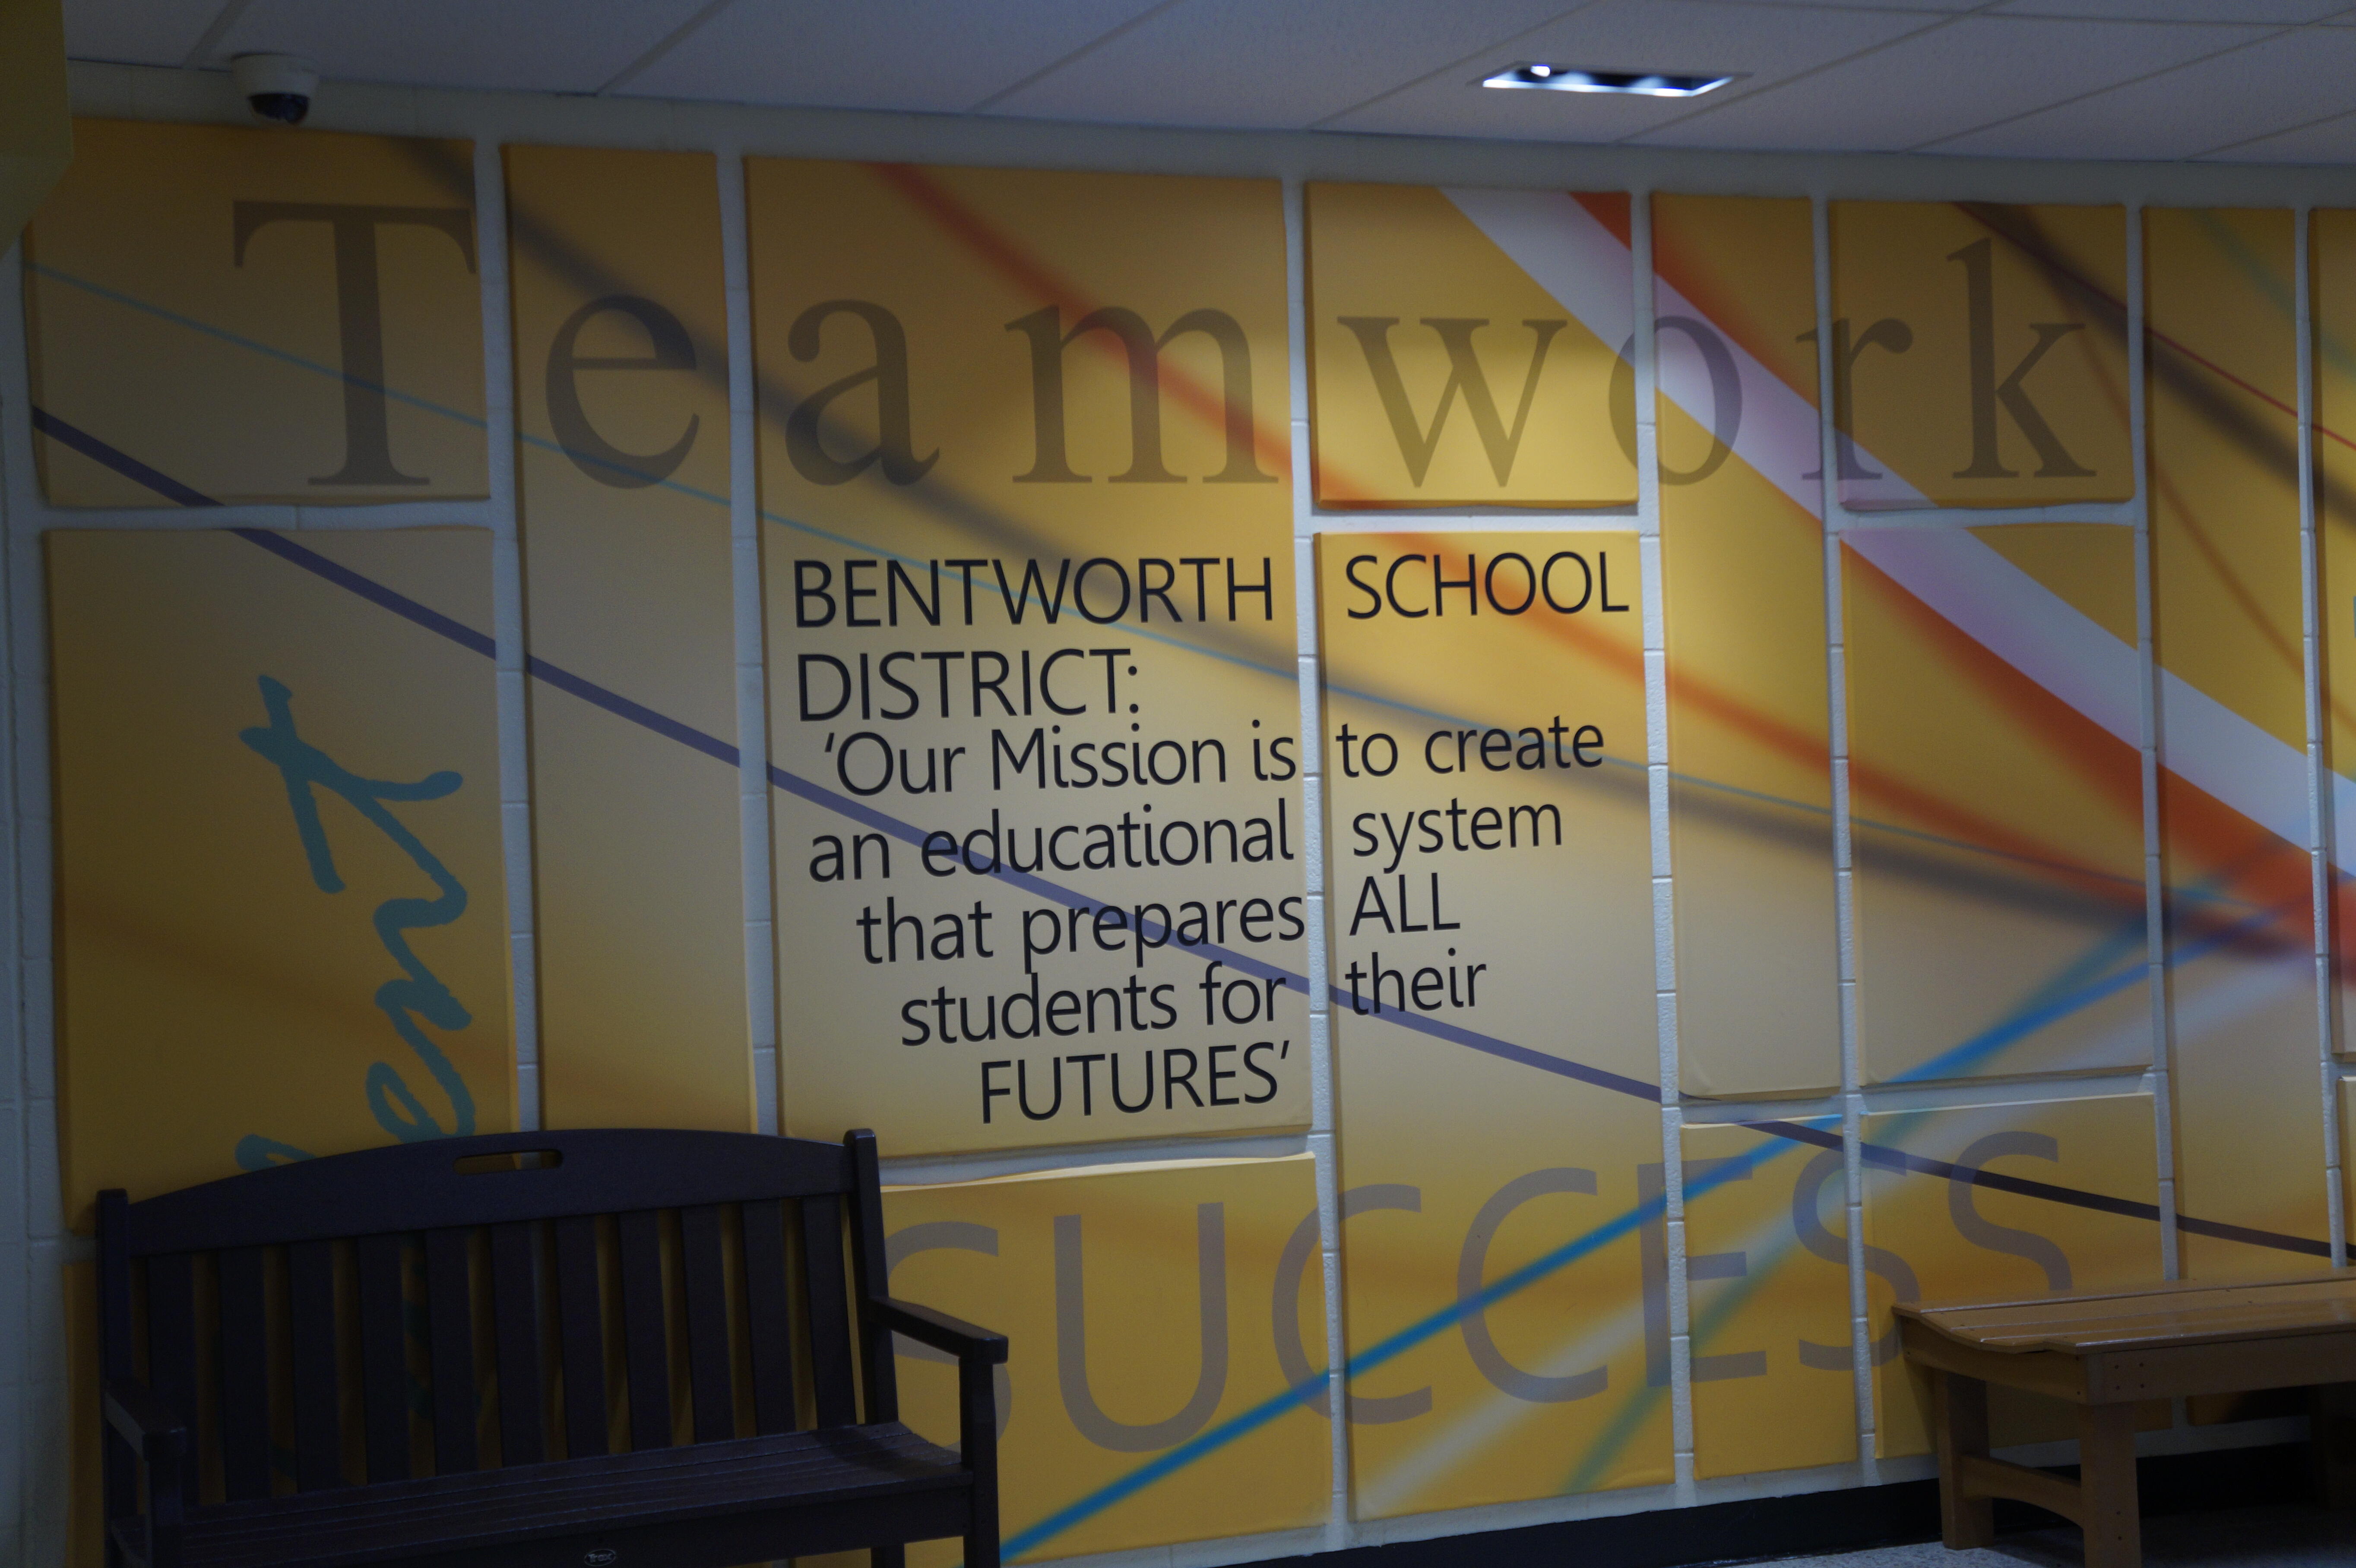 Bentworth School District Spotlight Image 6